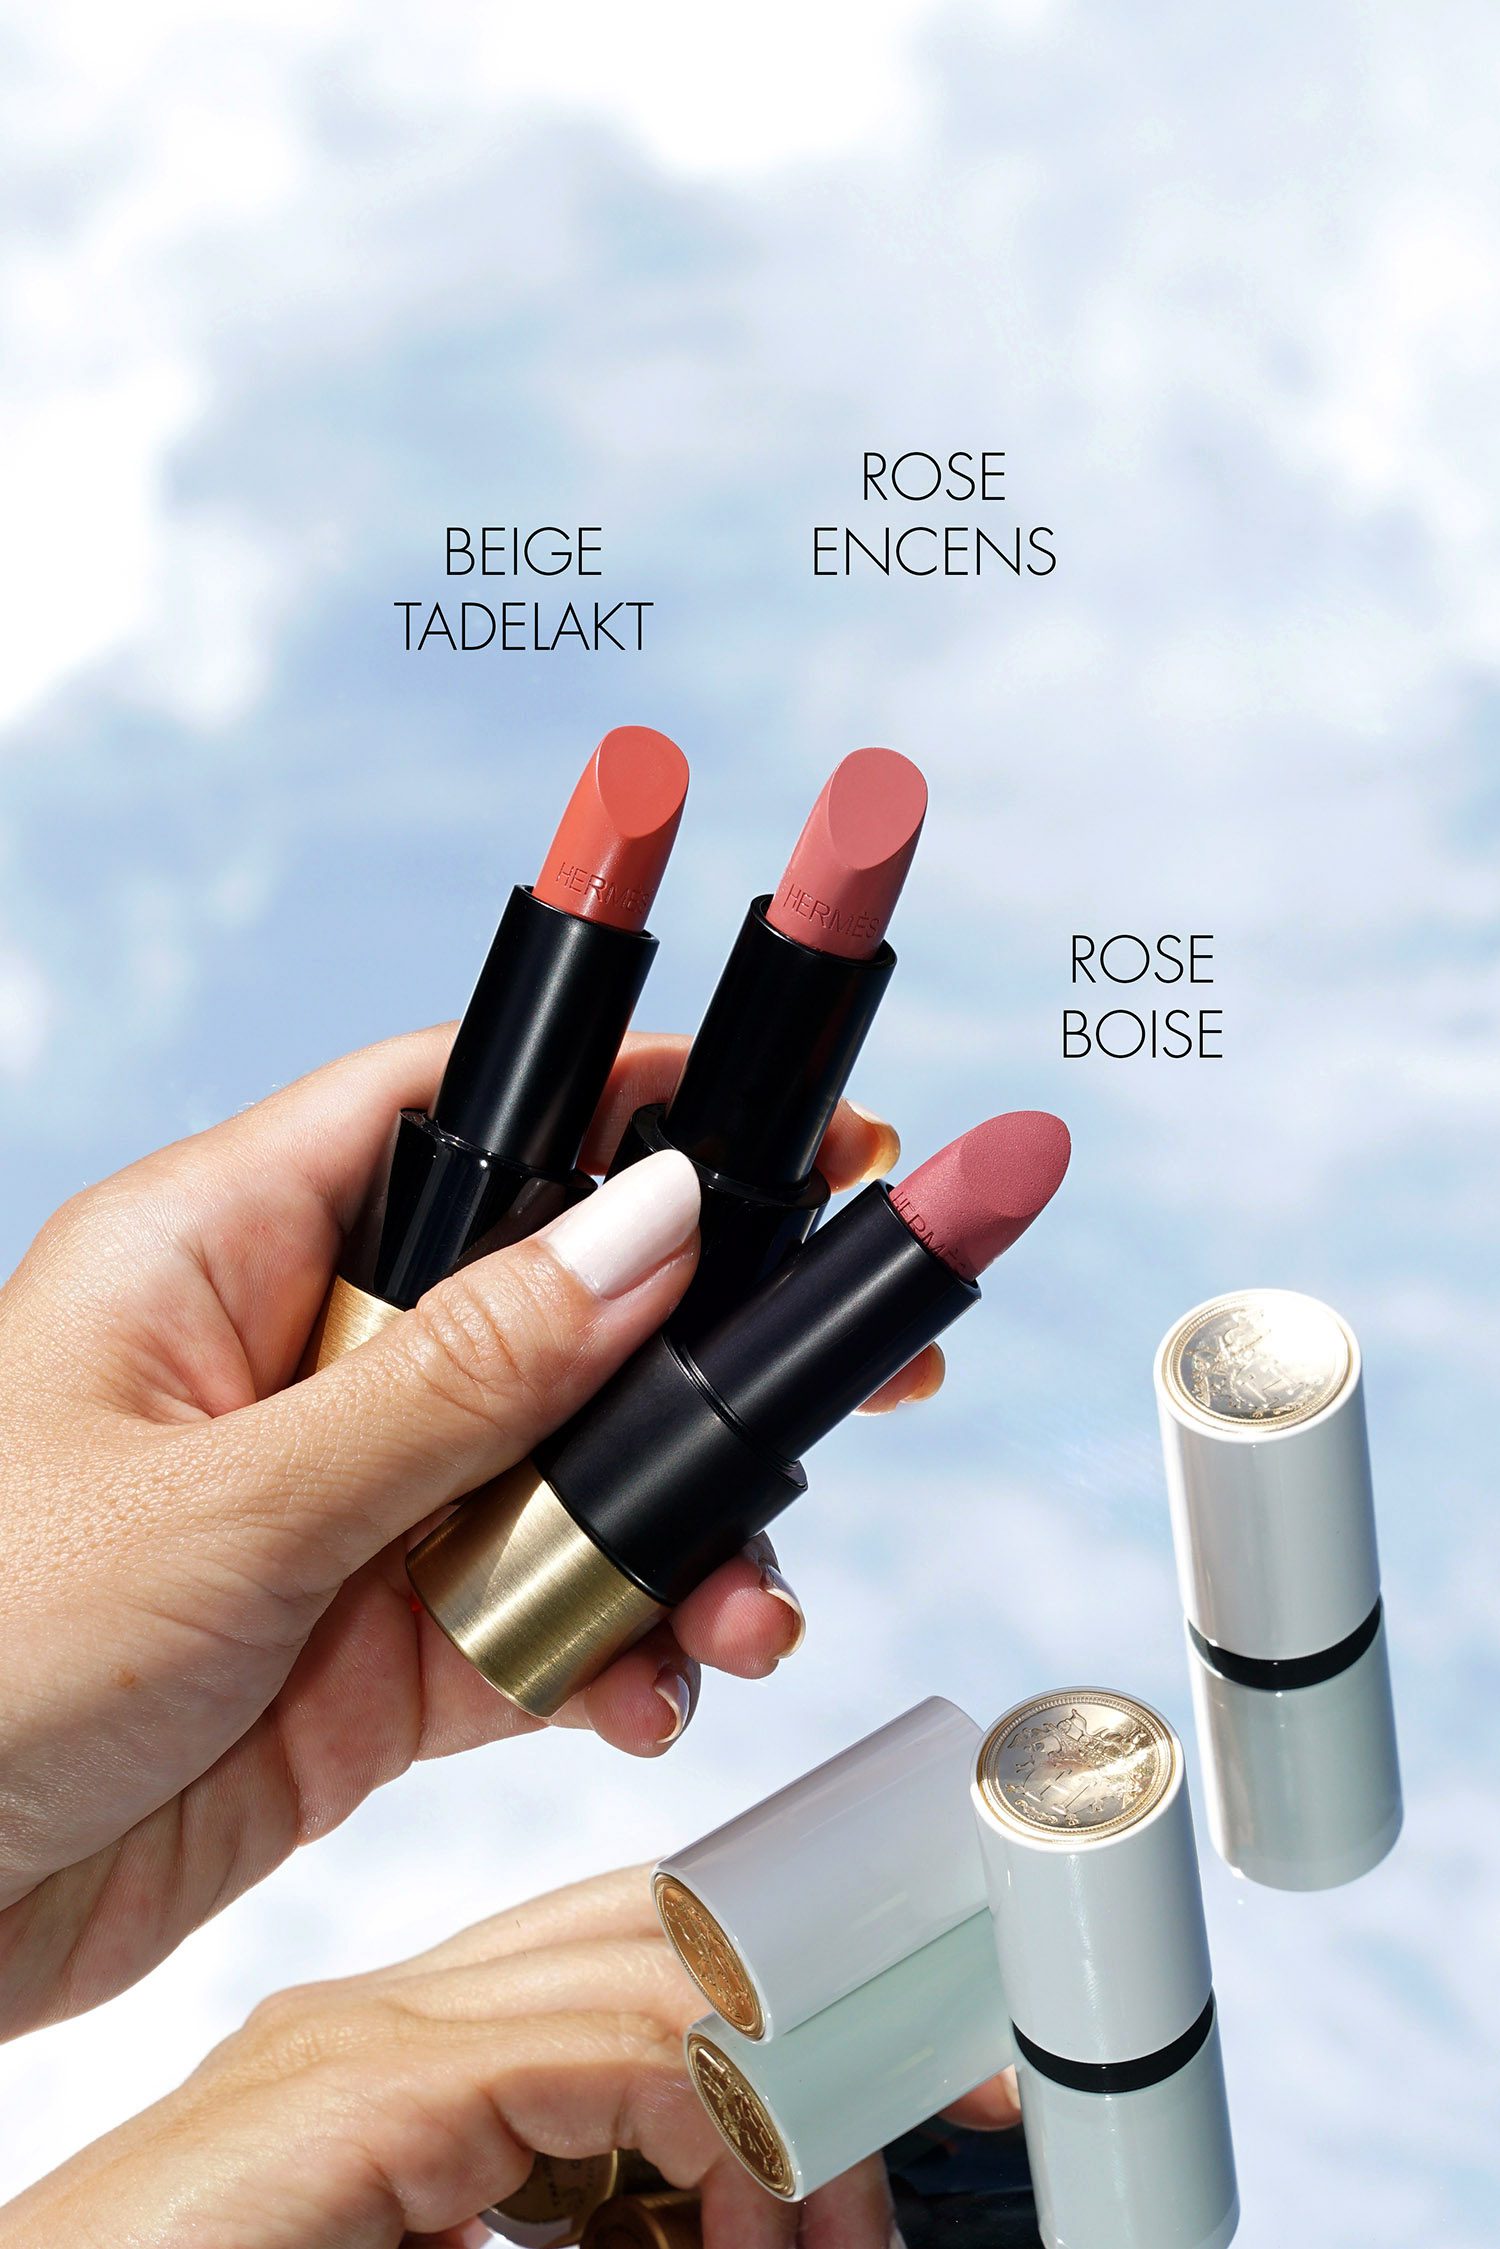 Hermes Lipstick Review + Wear Test⎮A $67 Lipstick Worth it?! 